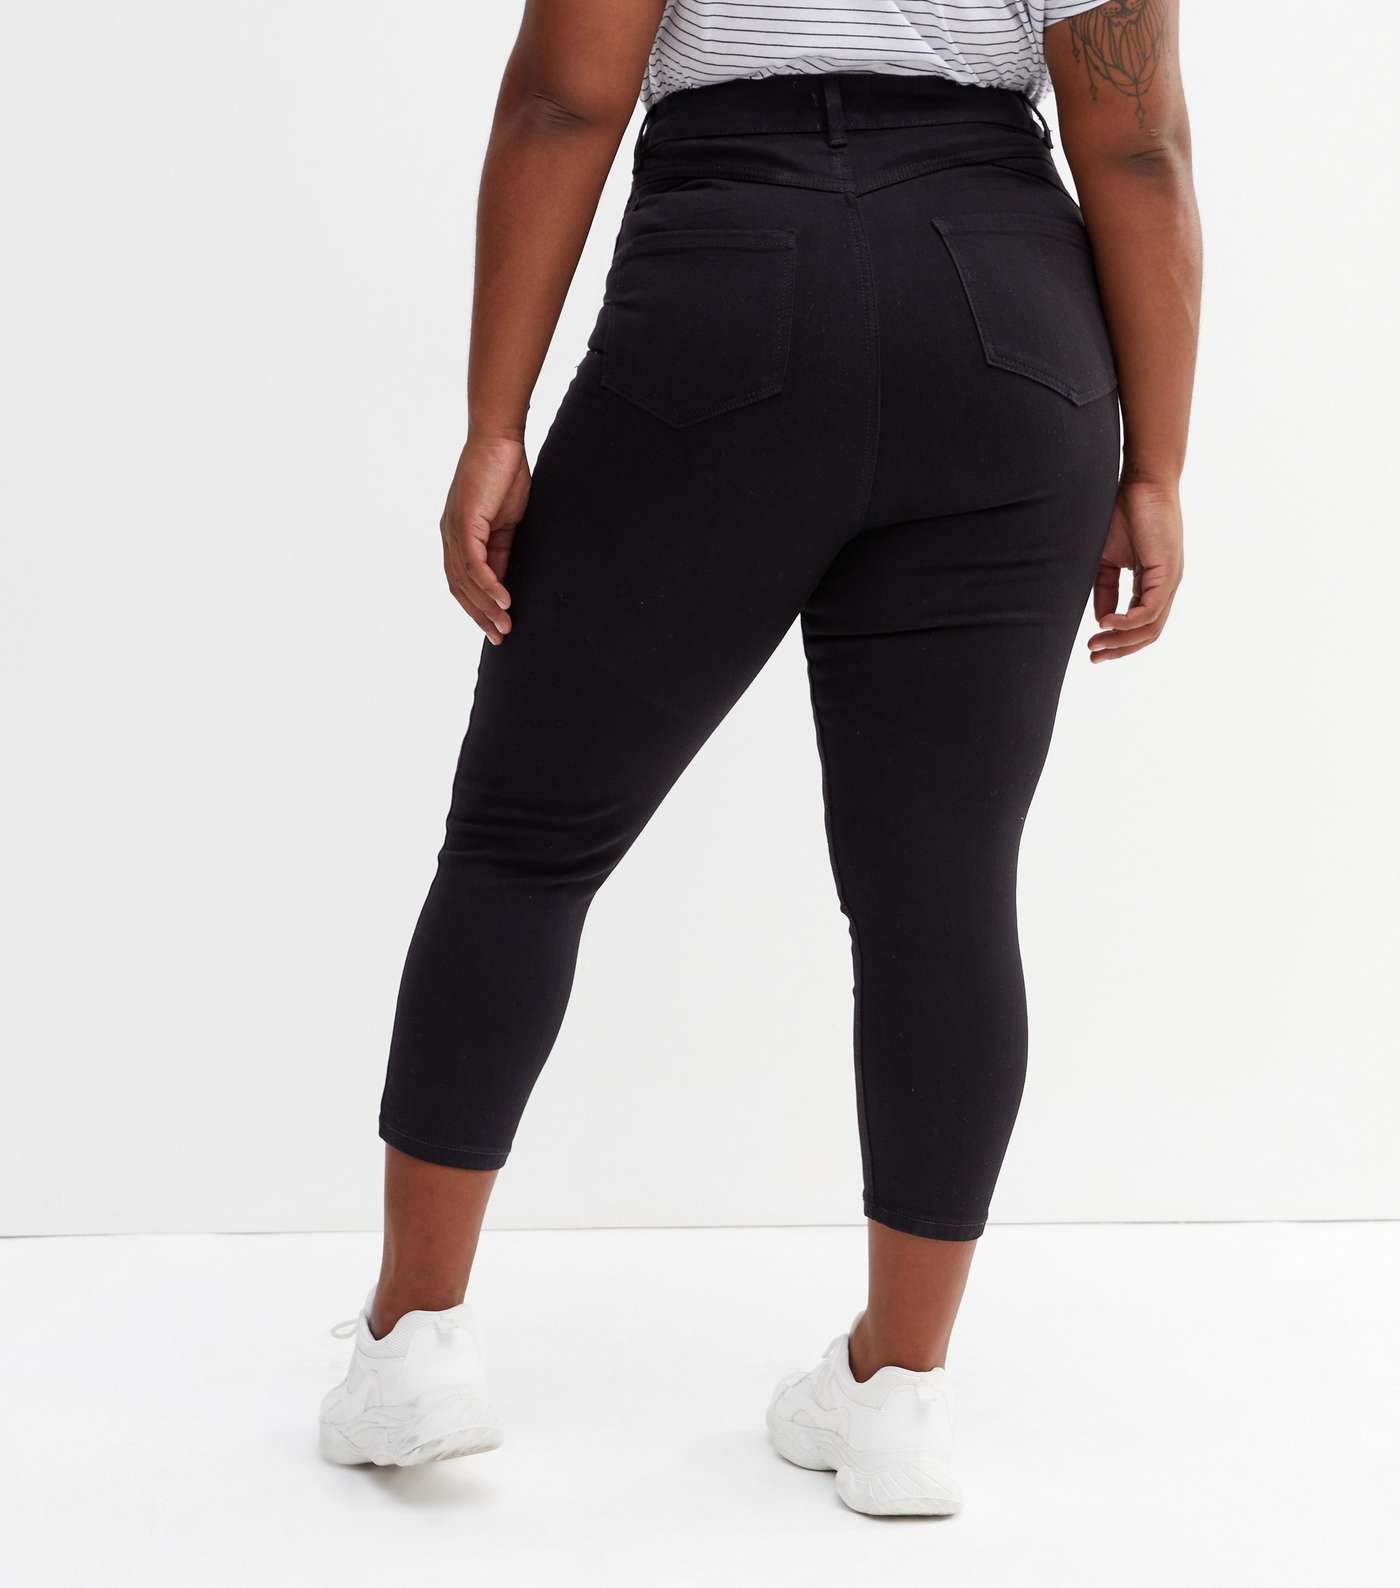 Curves Black 'Lift & Shape' Jenna Crop Skinny Jeans Image 4